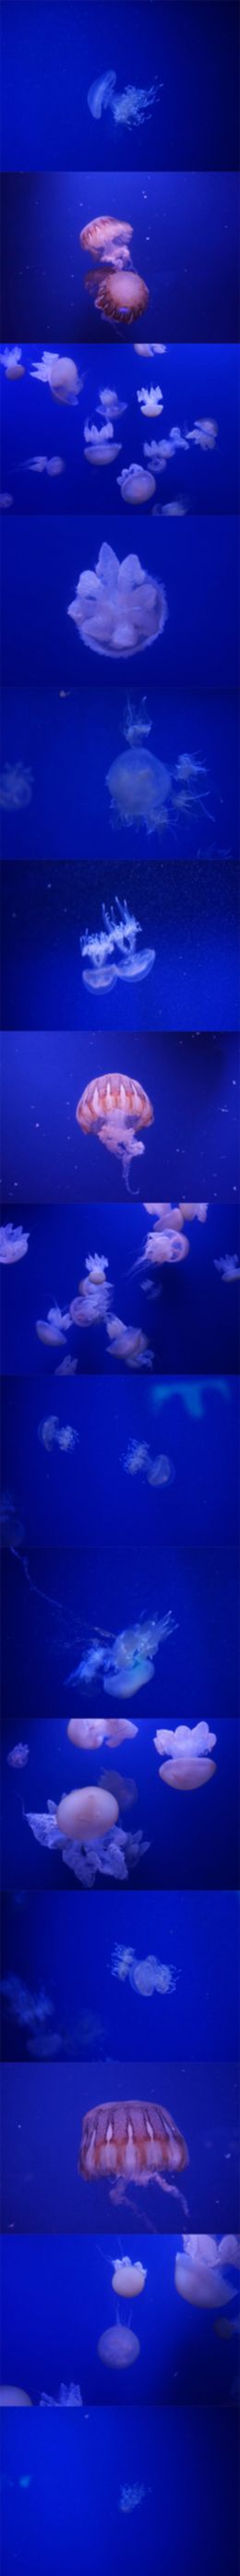 Fotografien, Jellyfish, Jenny Owens